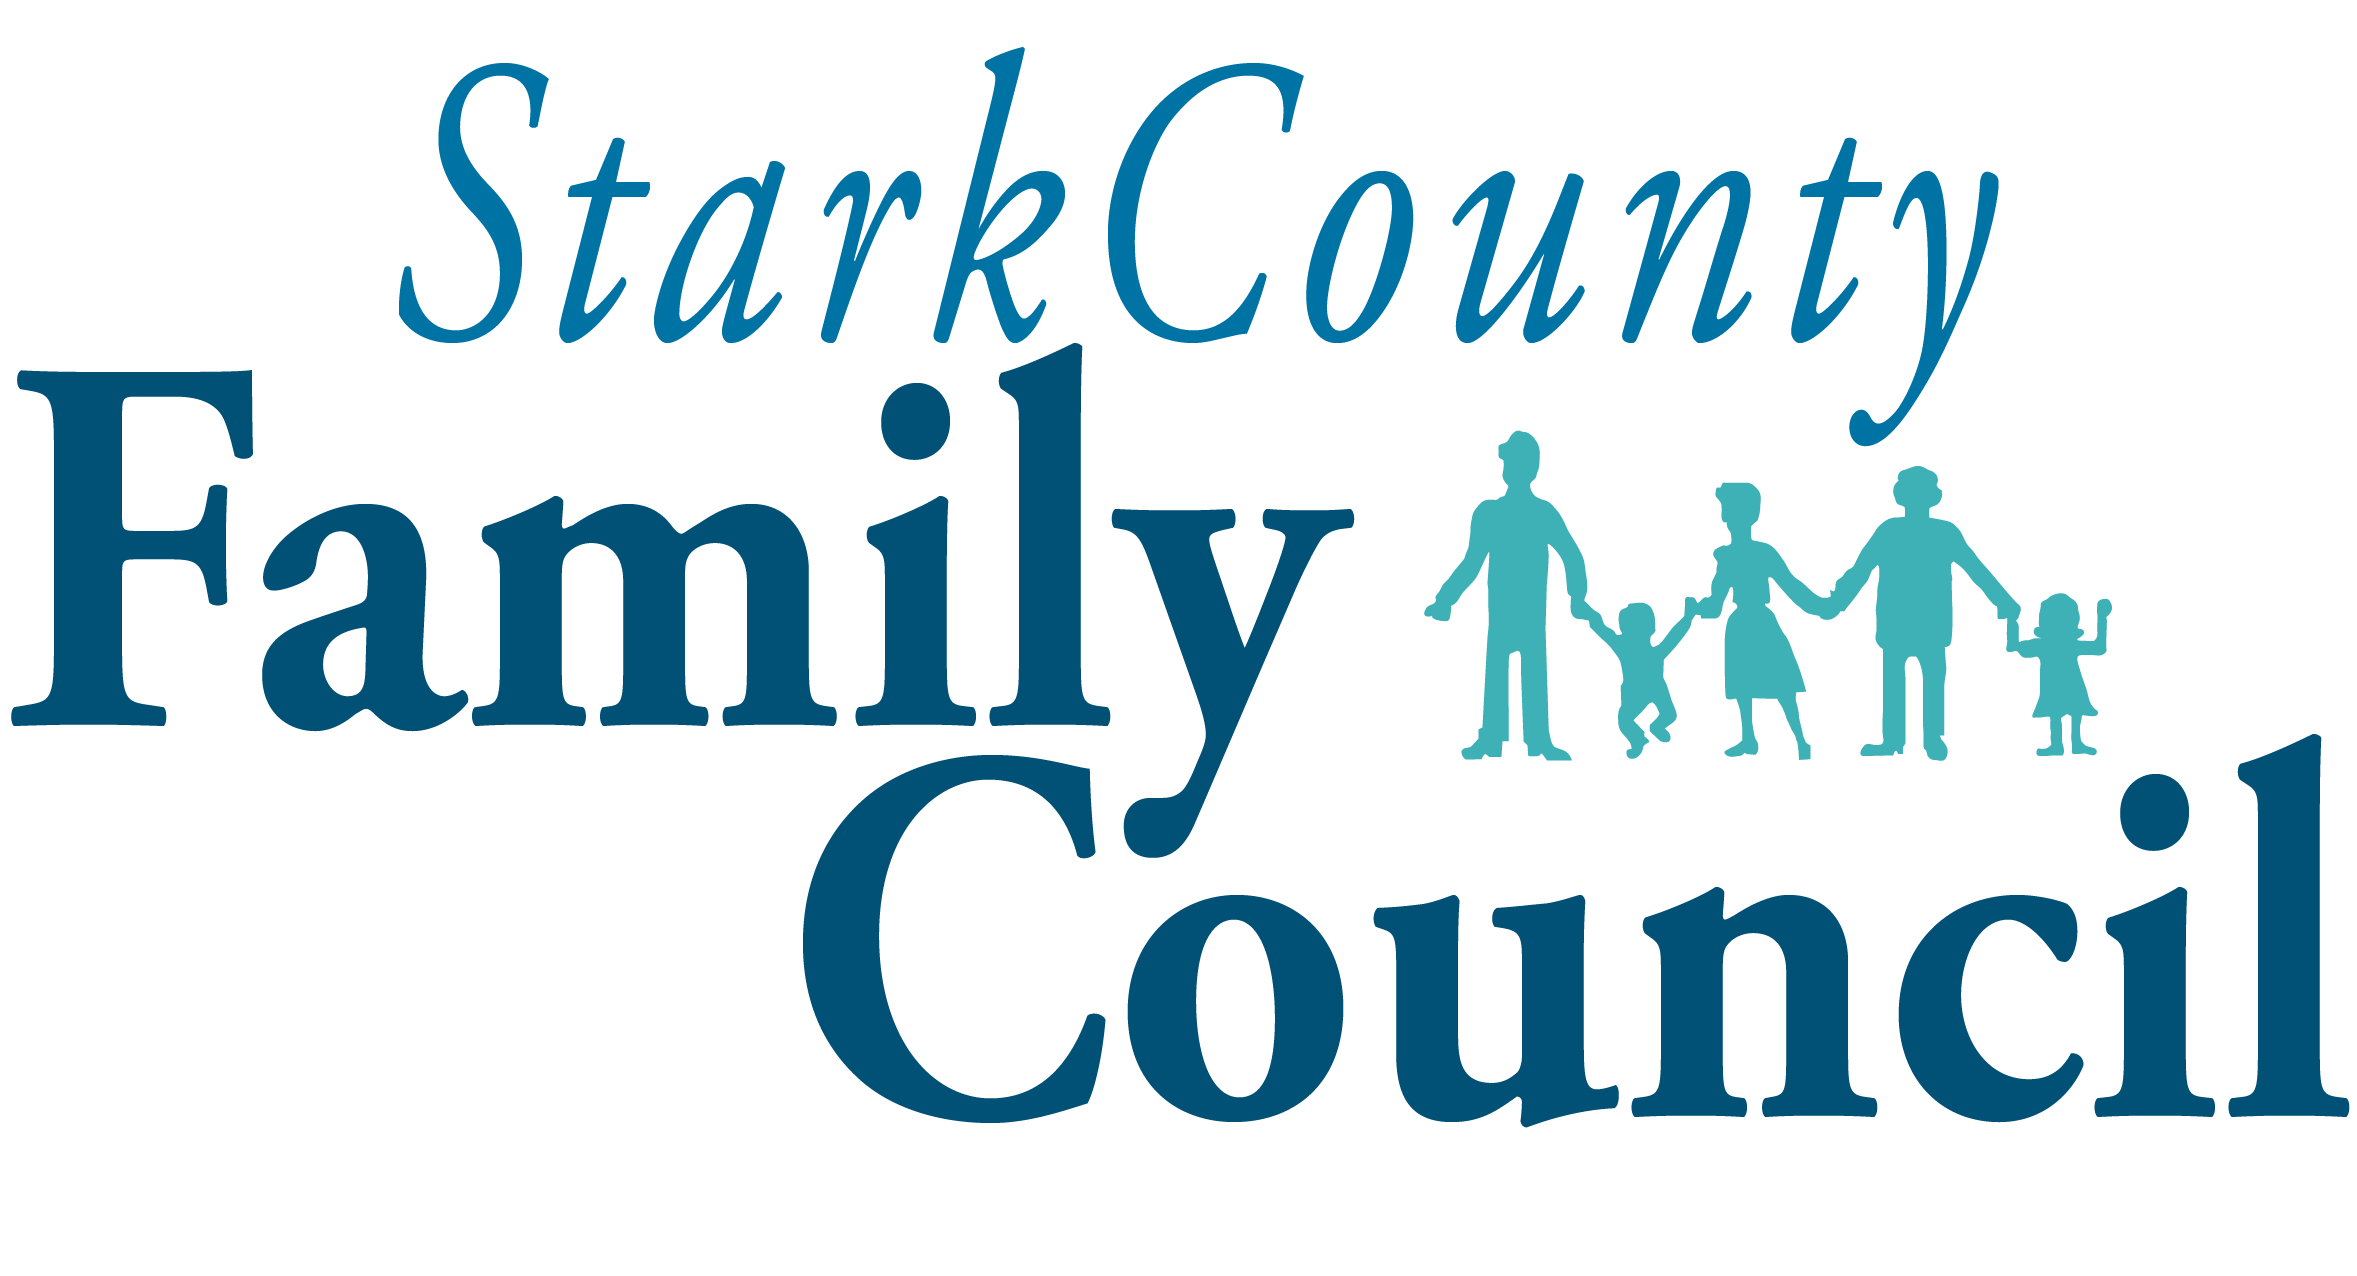 Stark County Family Council Logo